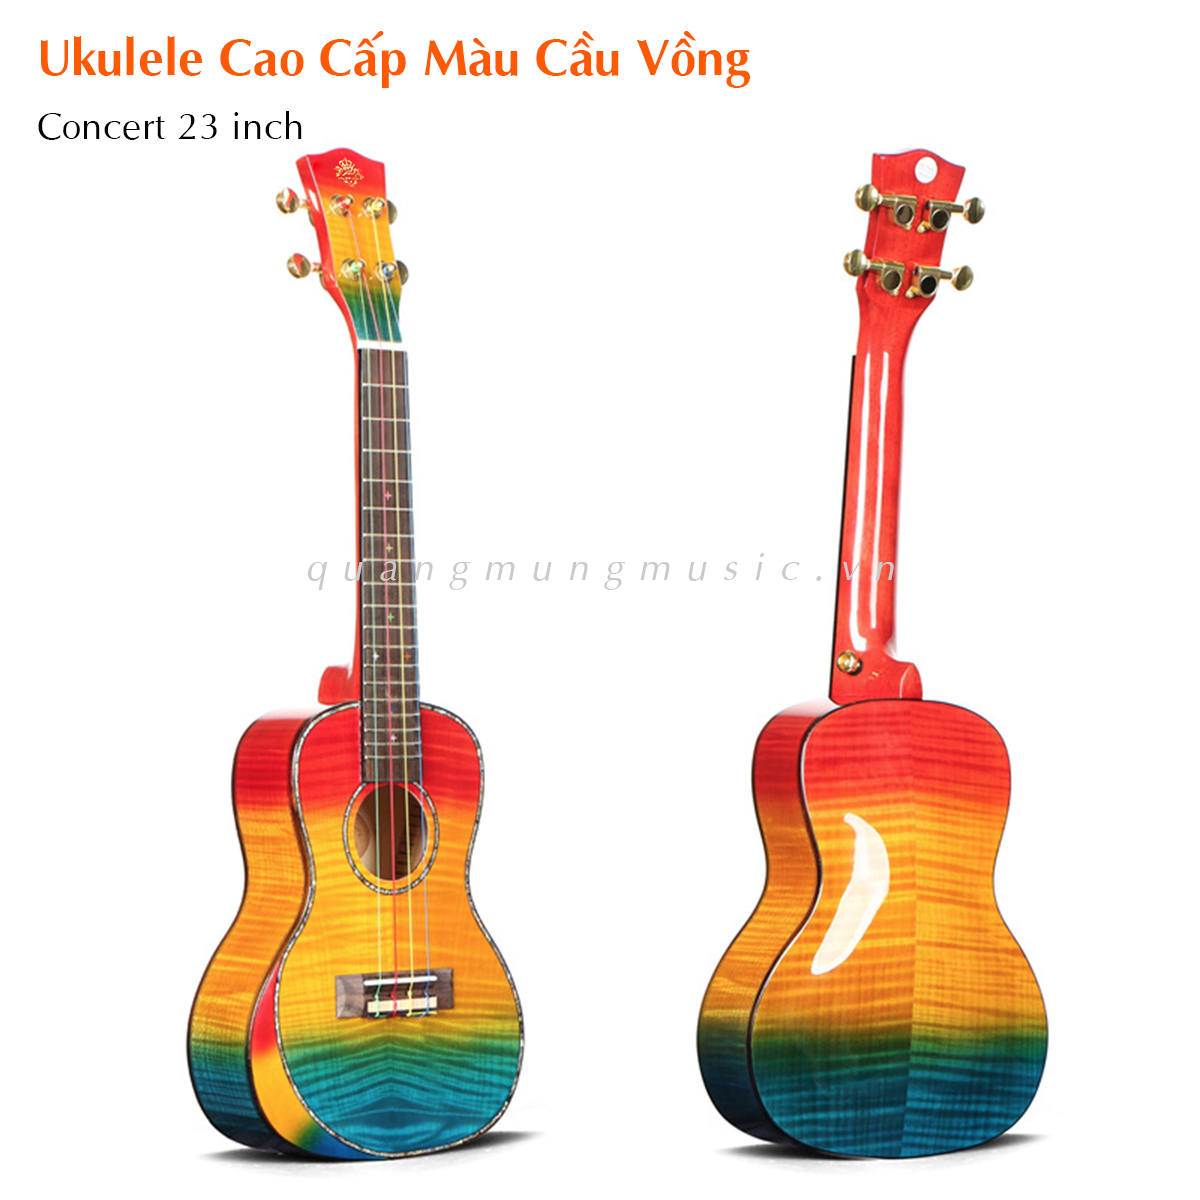 dan-ukulele-concert-23-inch-cao-cap-mau-cau-vong